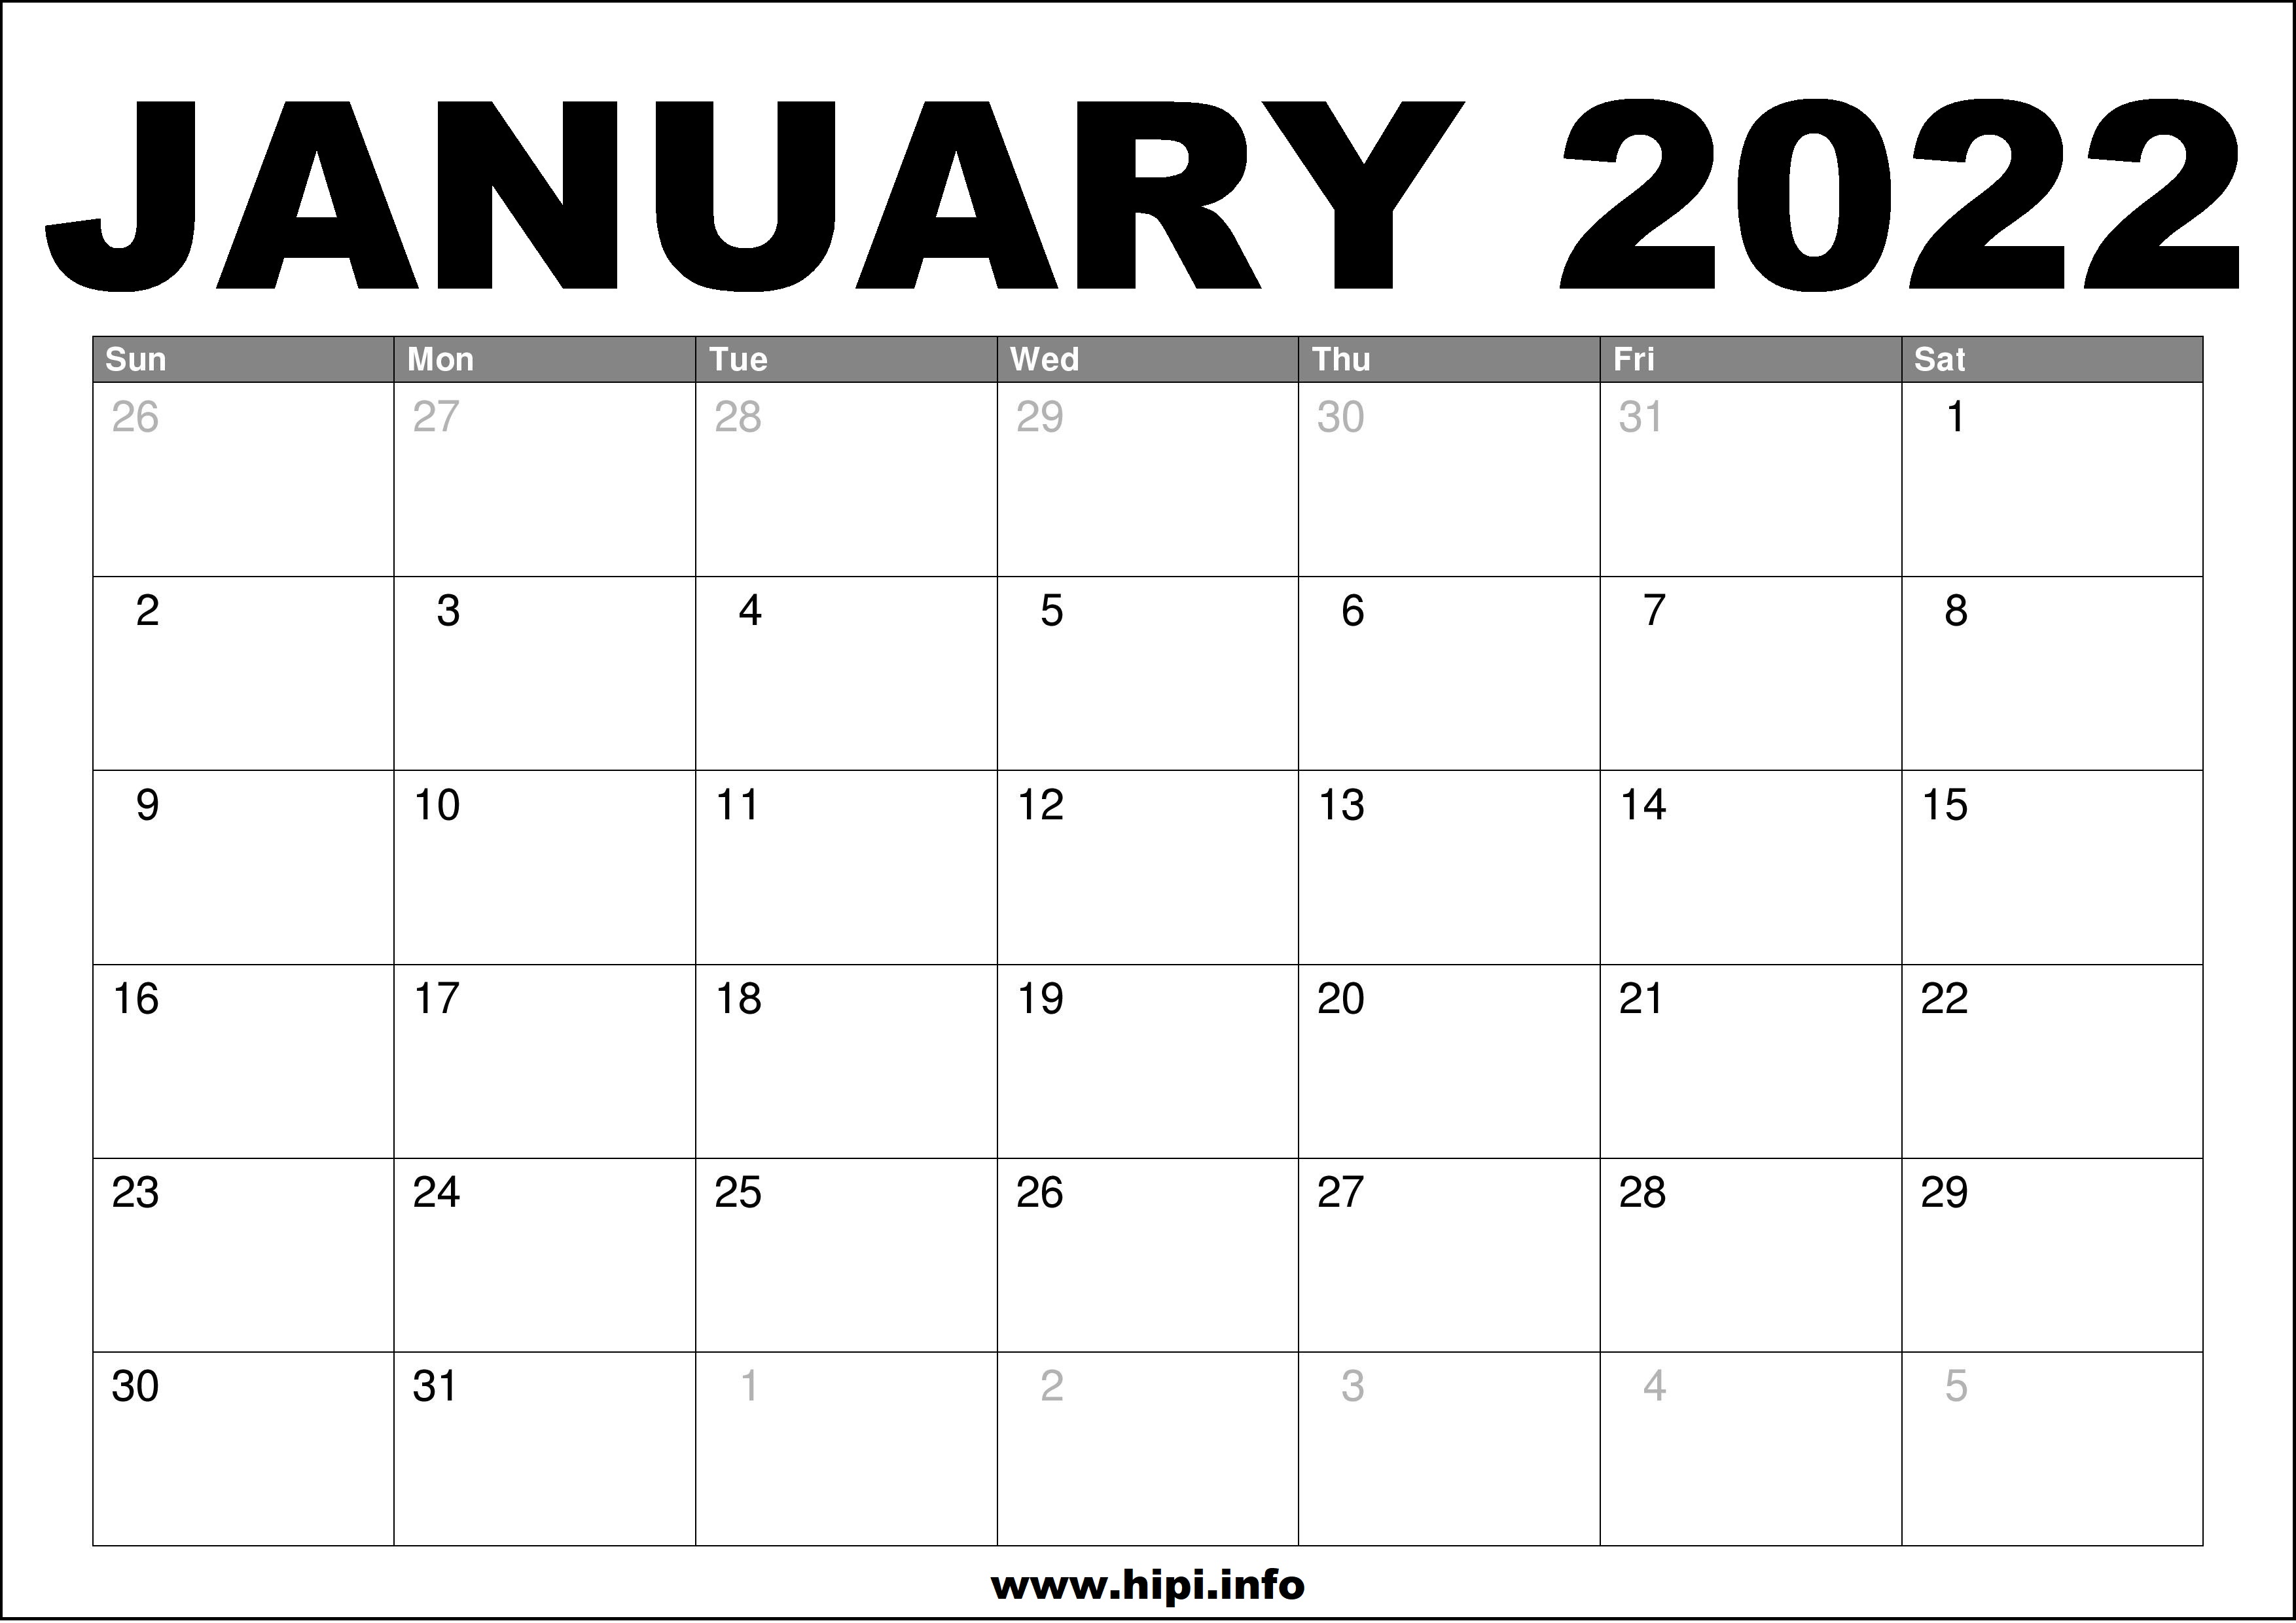 Free Calendar January 2022 January 2022 Calendar Printable Free - Hipi.info | Calendars Printable Free